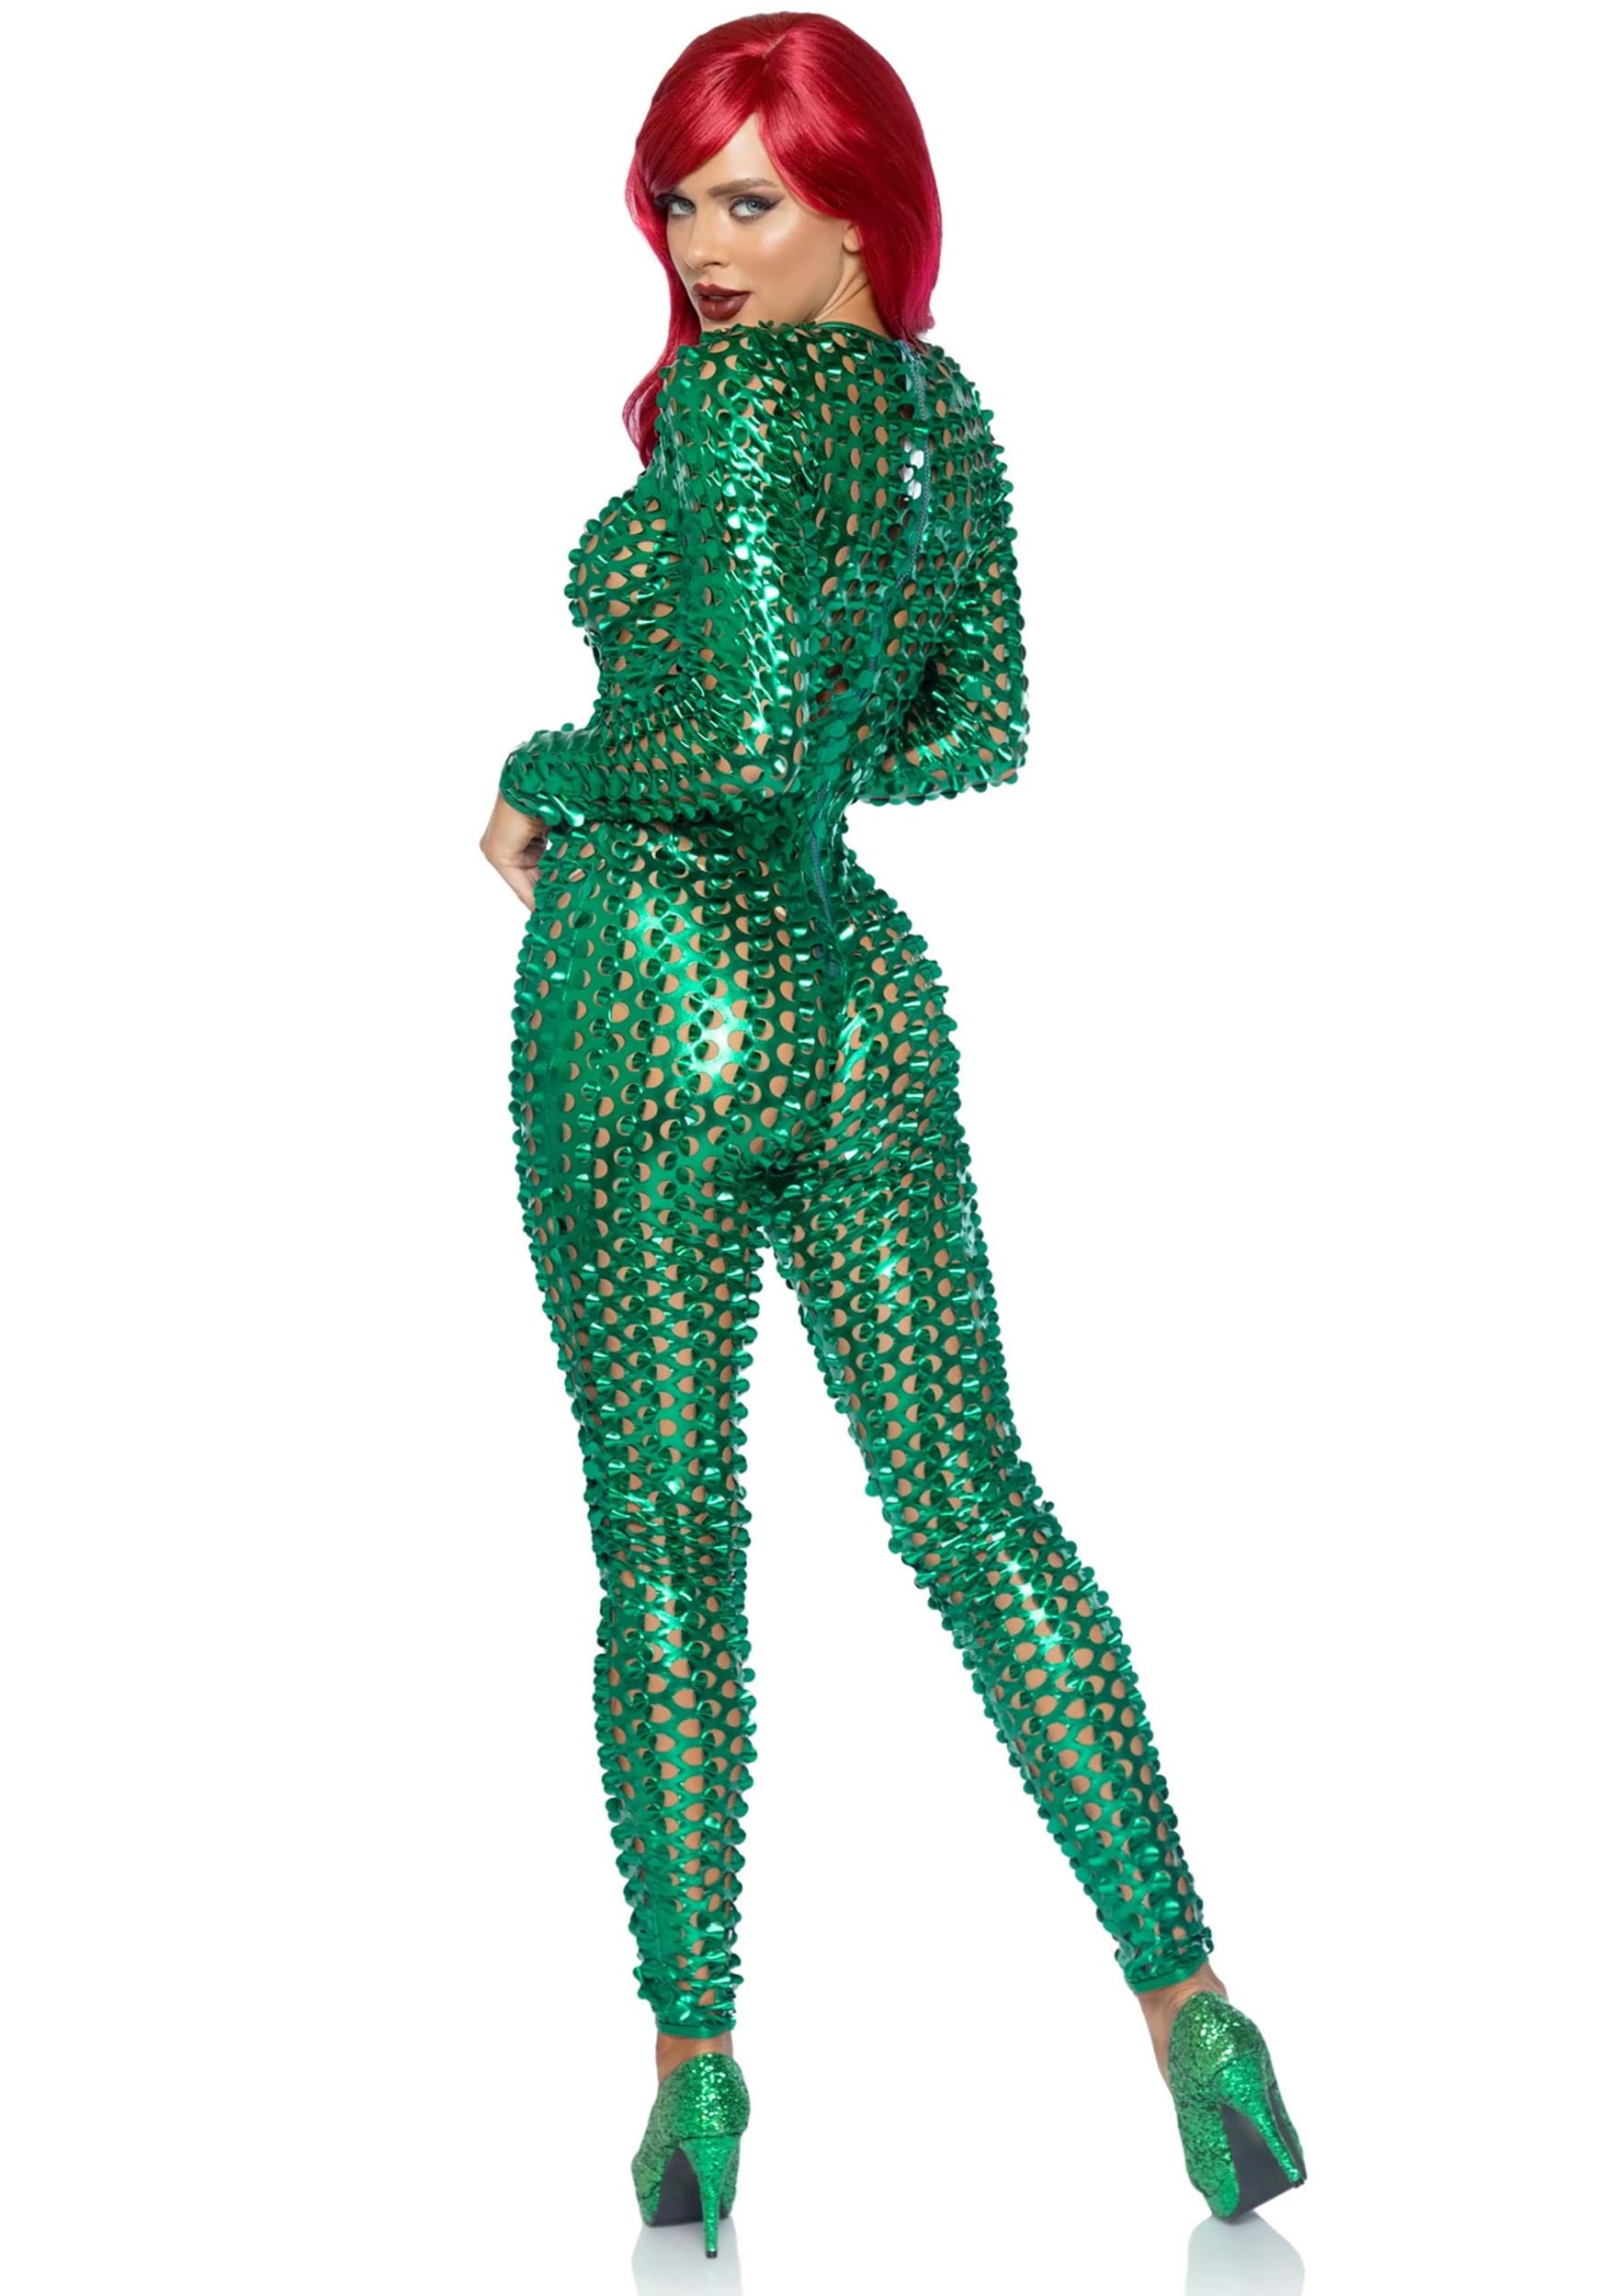 Green Laser Cut Metallic Catsuit Costume